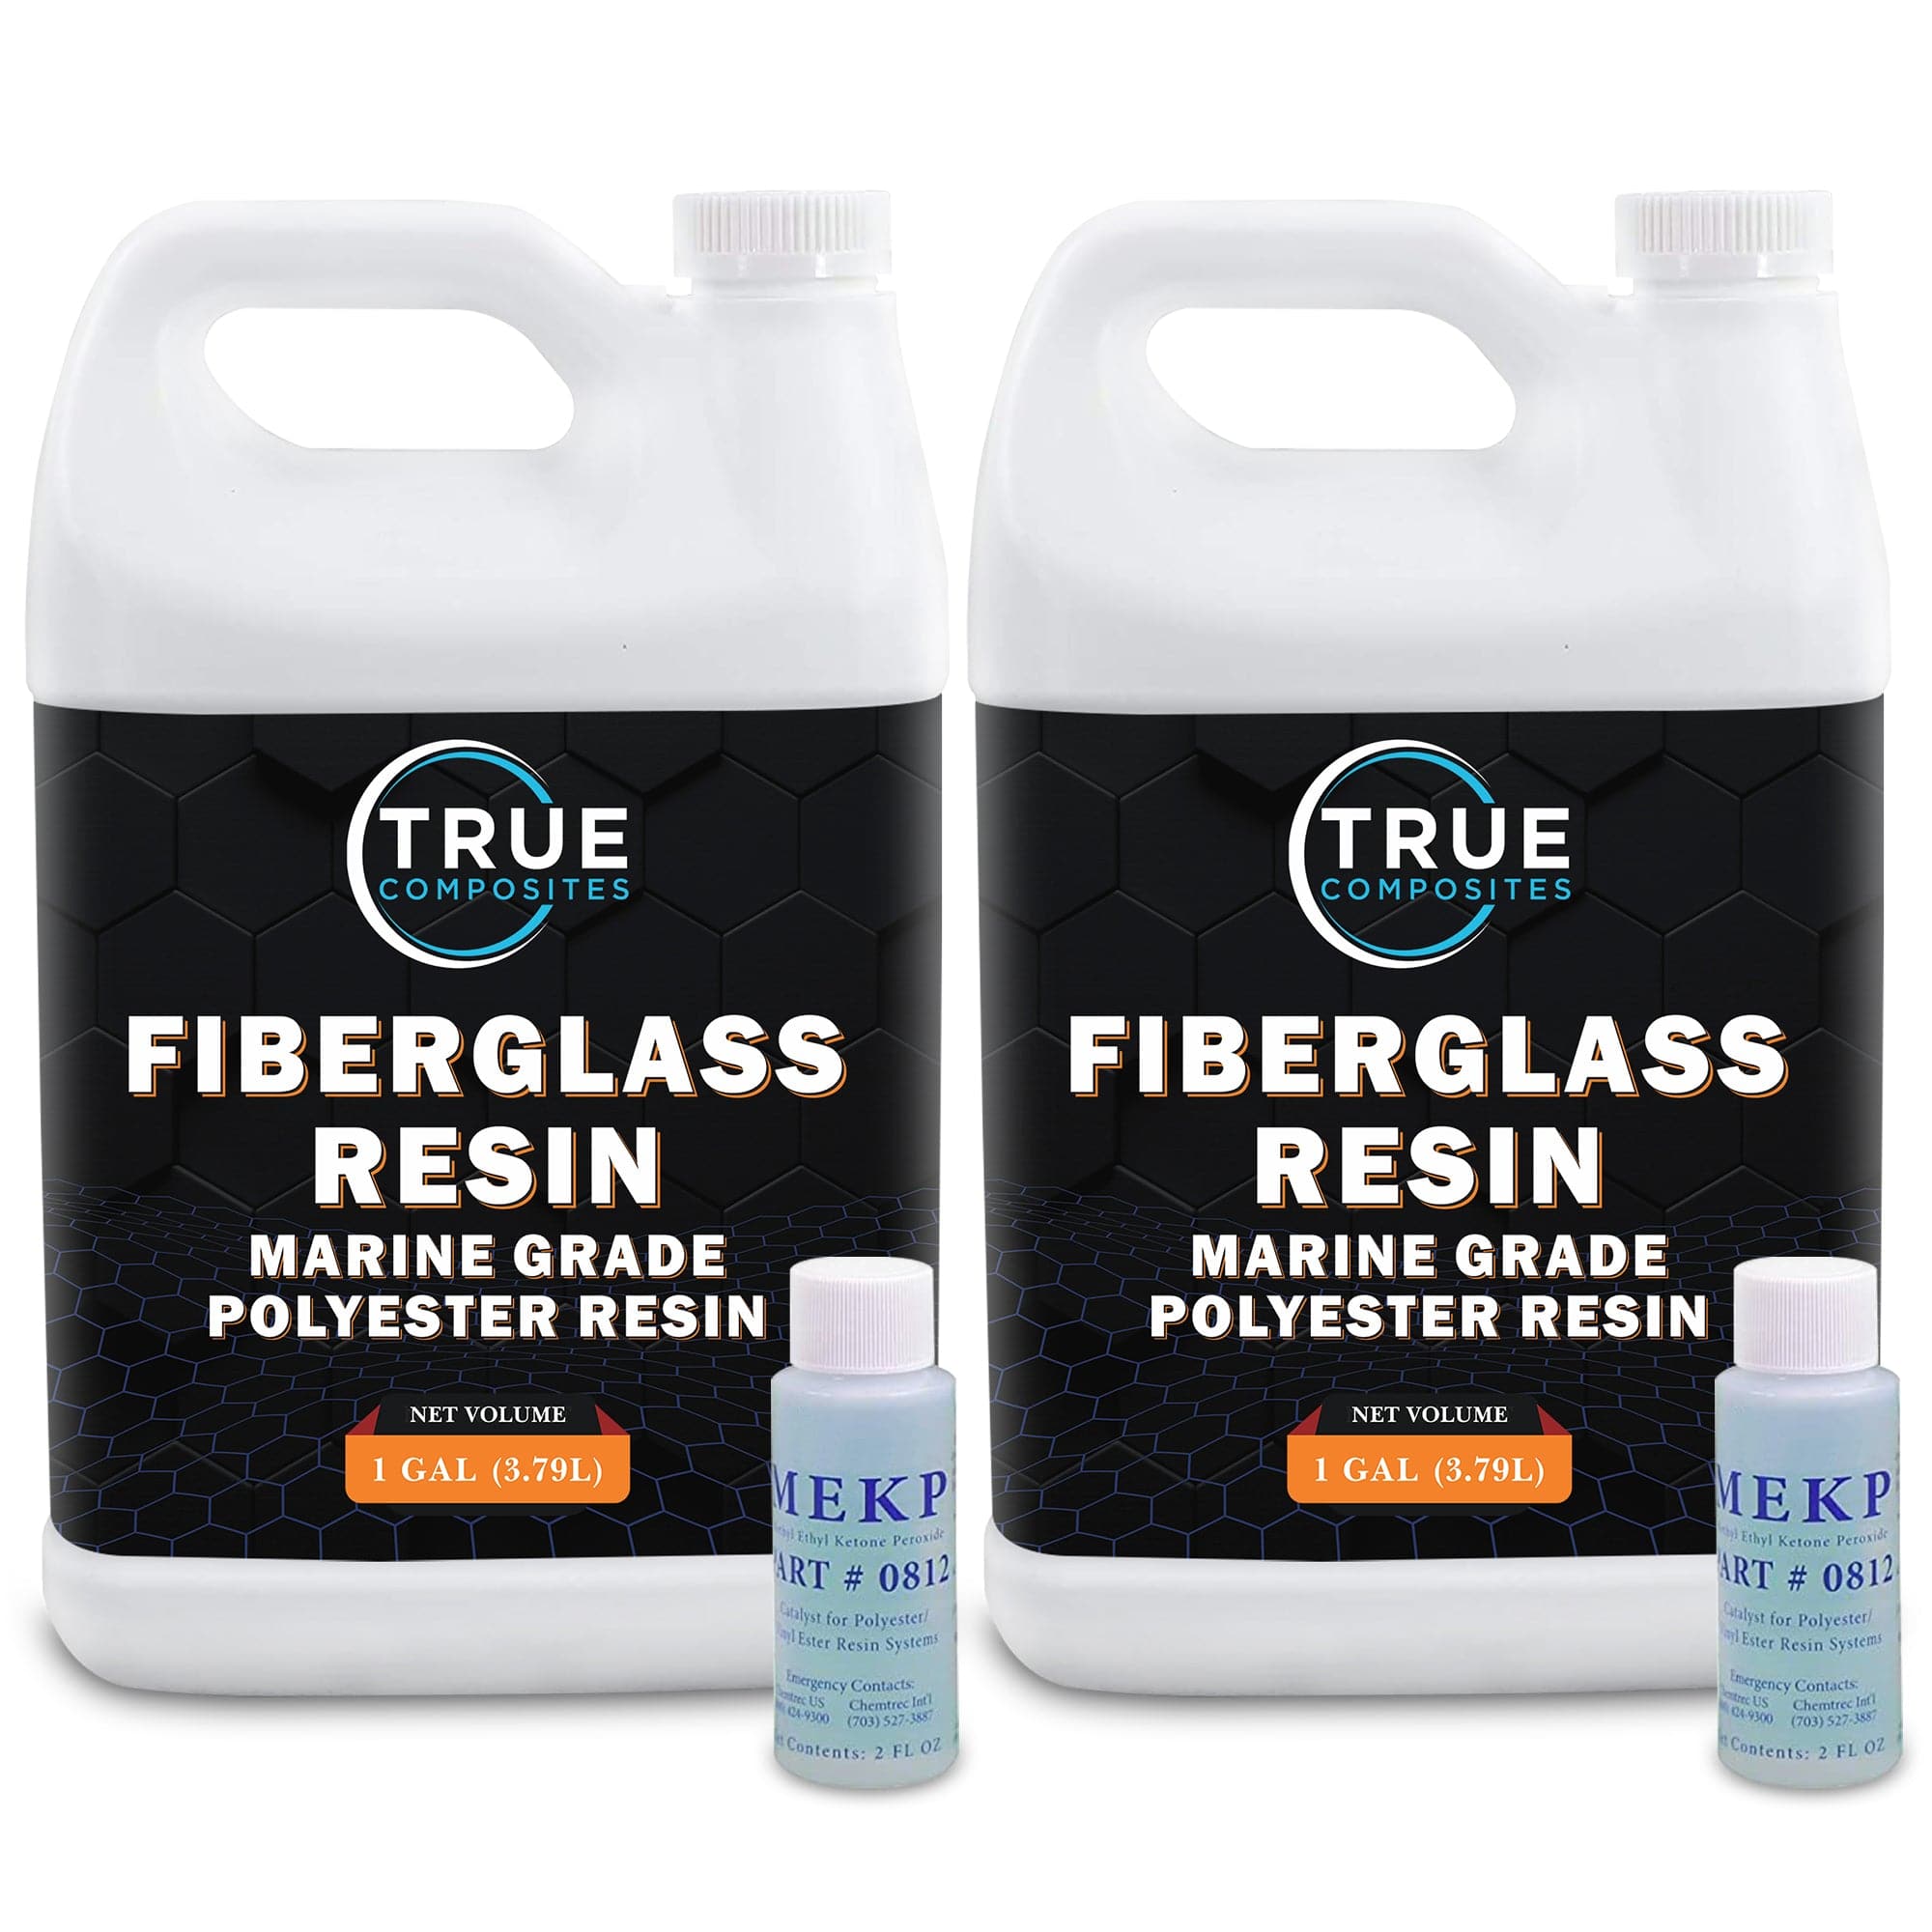 How much Fiberglass resins do I need?